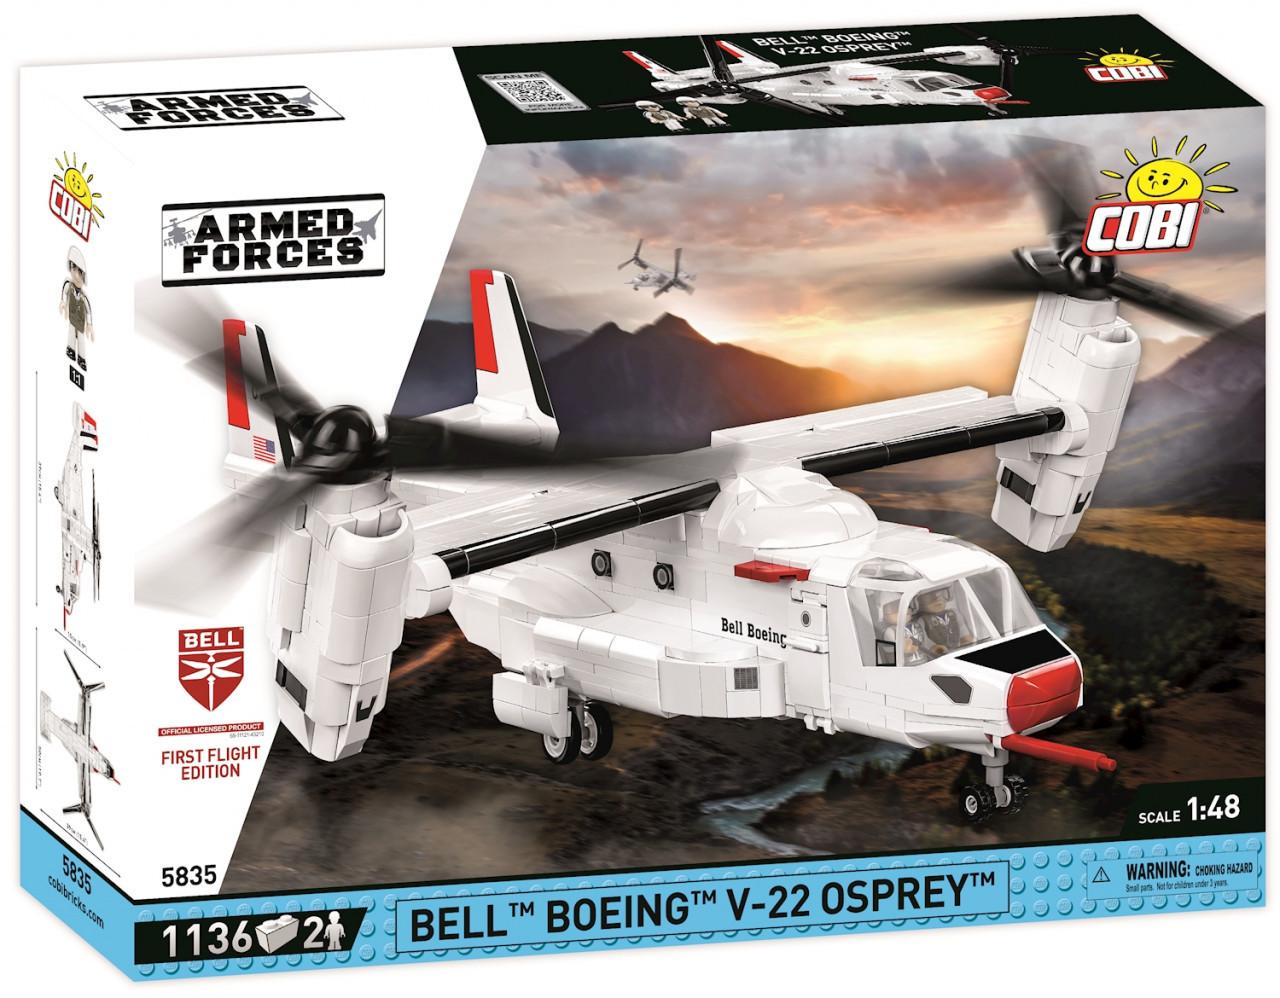 Cobi  Armed Forces Bell-Boeing V-22 Osprey First Flight Edition (5835) 